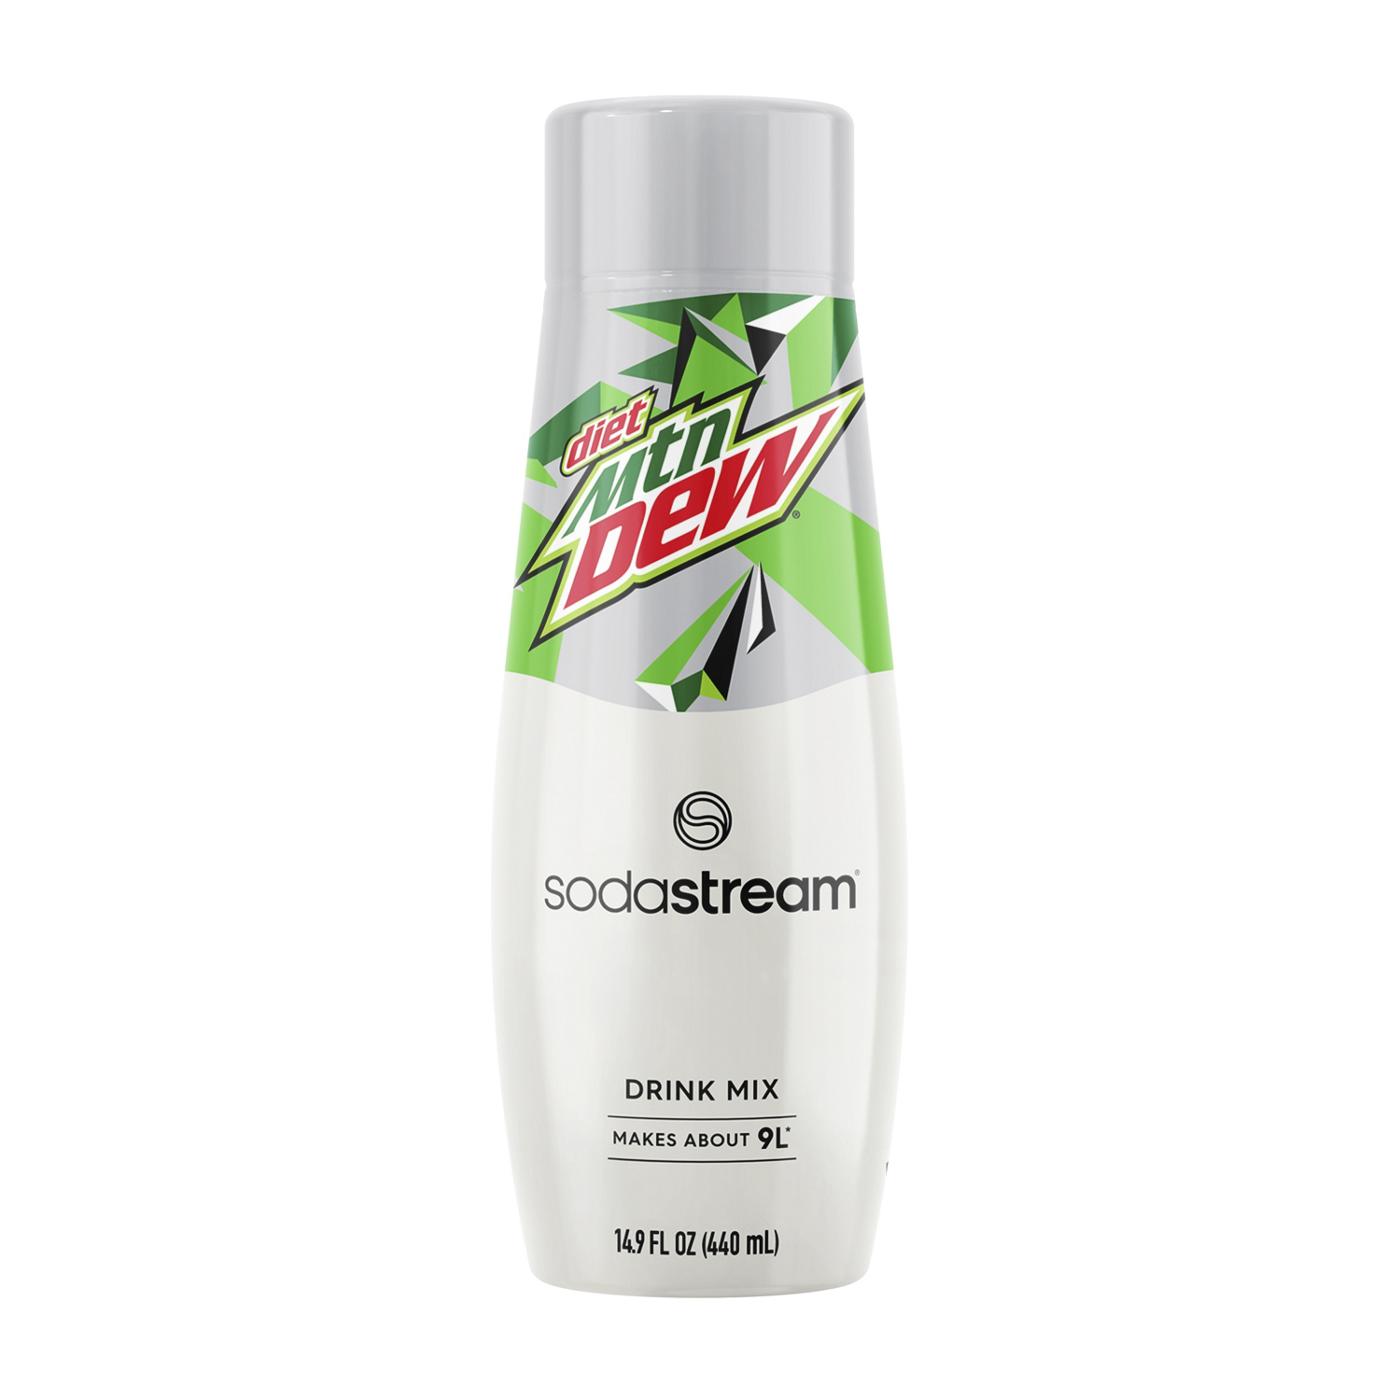 SodaStream Diet Mountain Dew Drink Mix; image 1 of 2